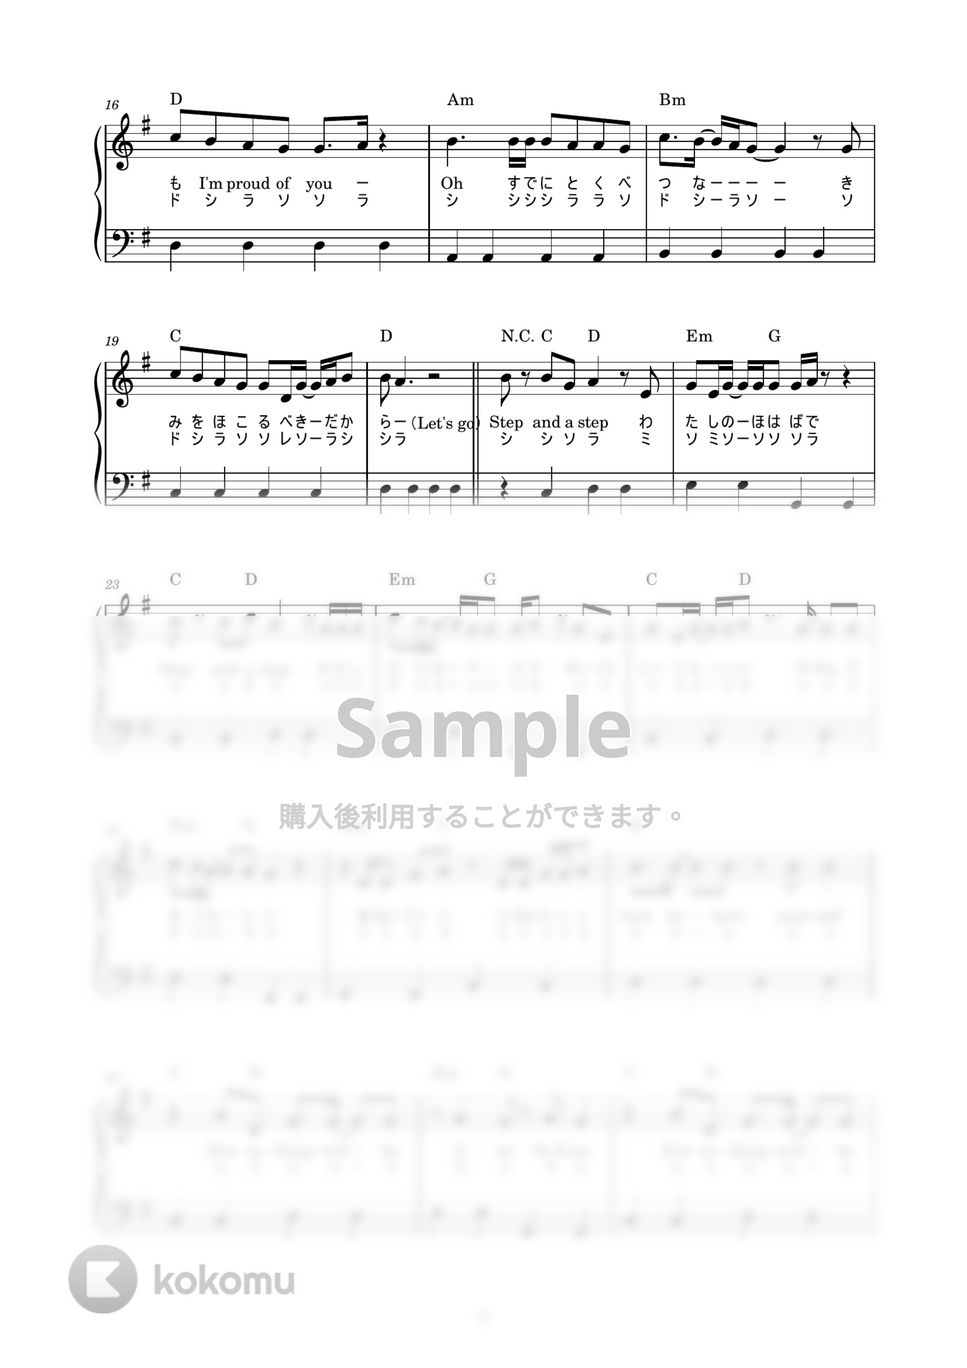 NiziU - Step and a step (かんたん / 歌詞付き / ドレミ付き / 初心者) by piano.tokyo